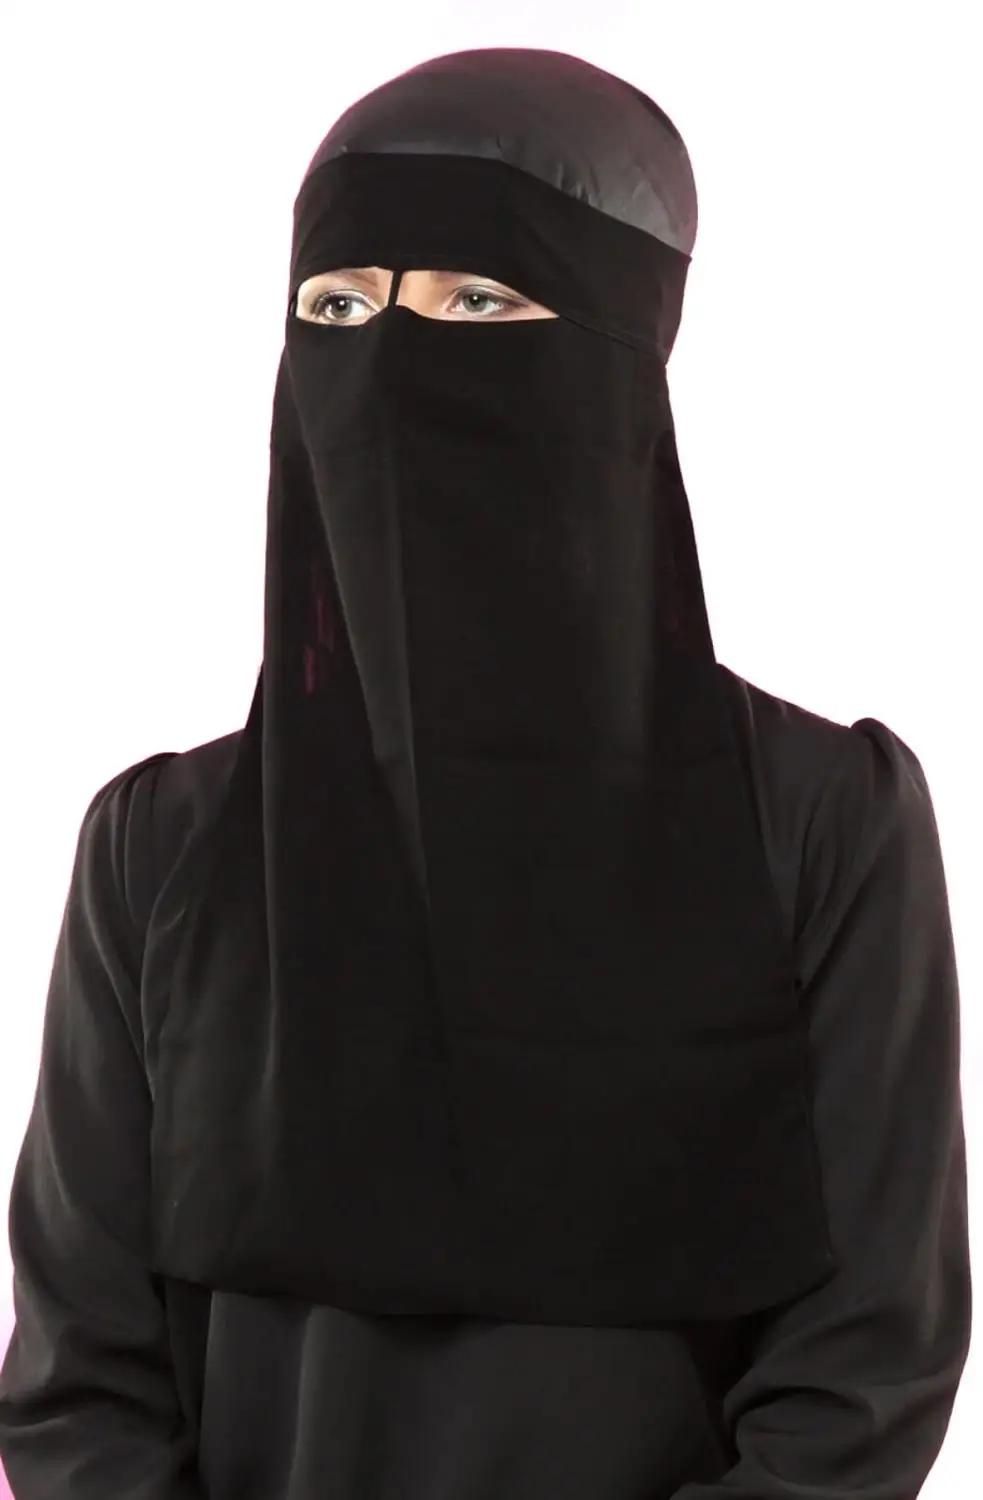 Muslim Bandana Scarf Islamic 1 2 3 layers Niqab Burqa Hijab Cap Veil Headwear Black Face Cover Abaya Style Wrap Head Covering